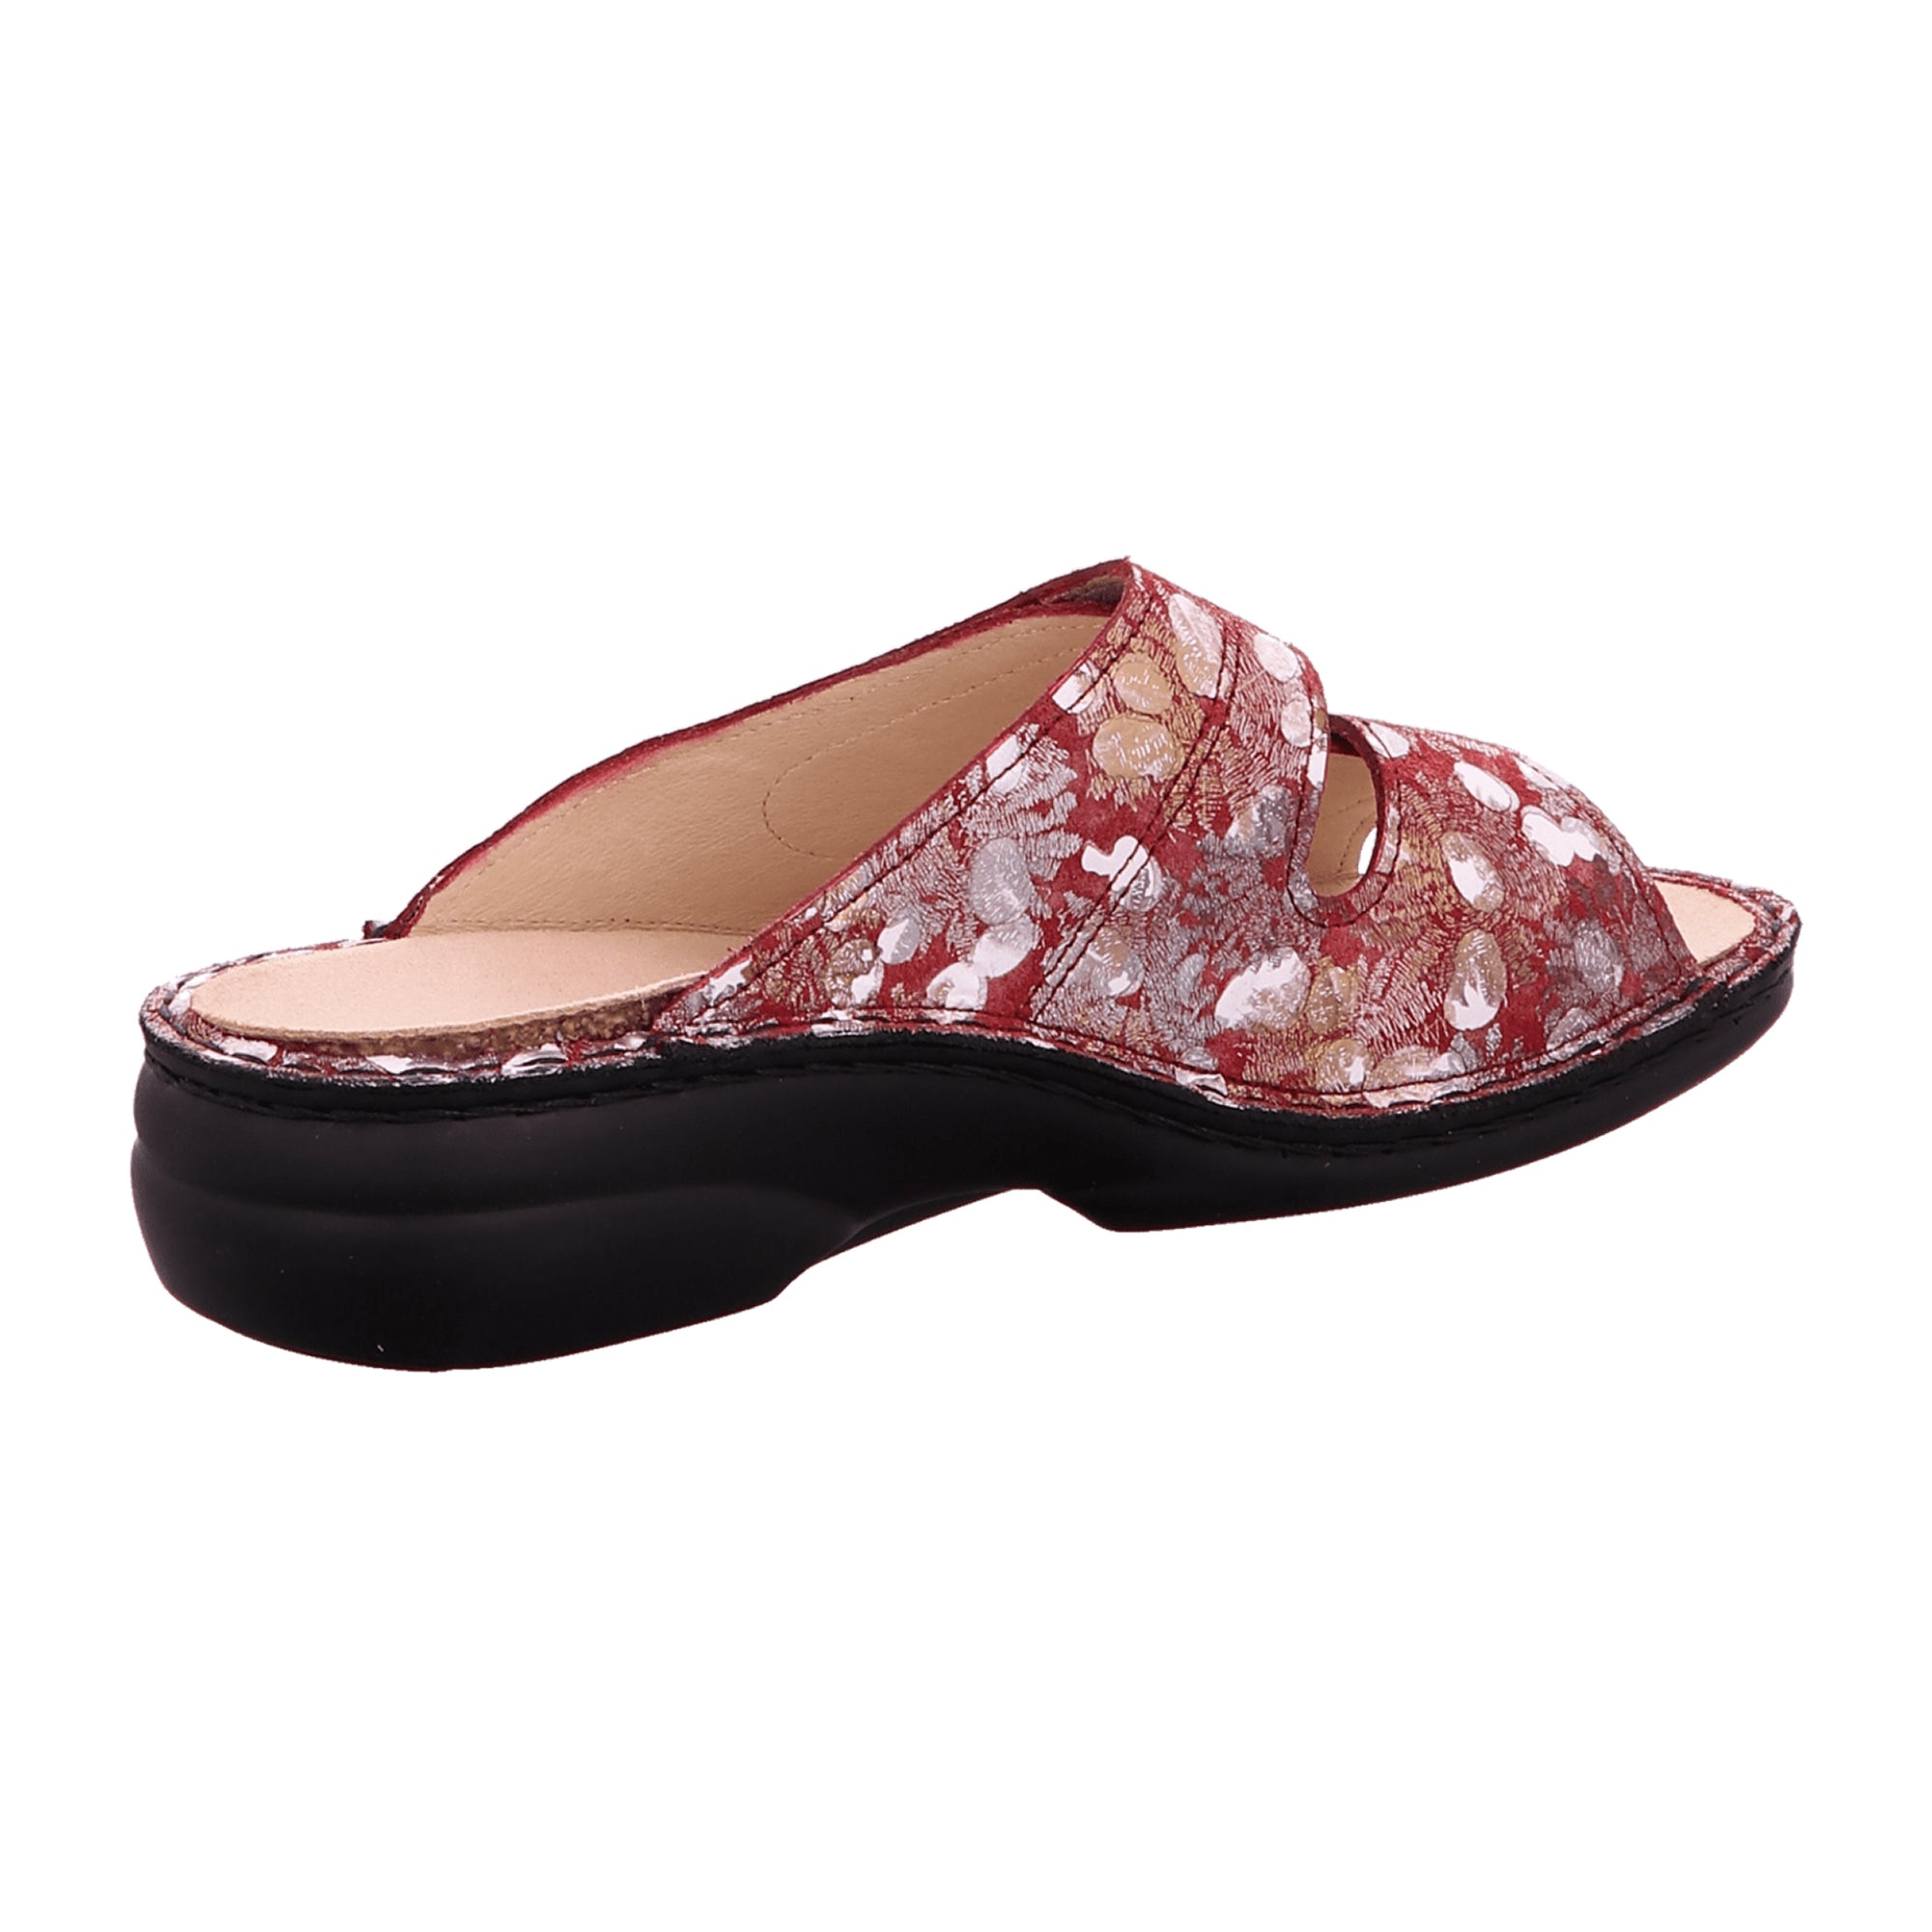 Finn Comfort Sansibar Women's Slide Sandals - Comfortable Leather Slides, Red